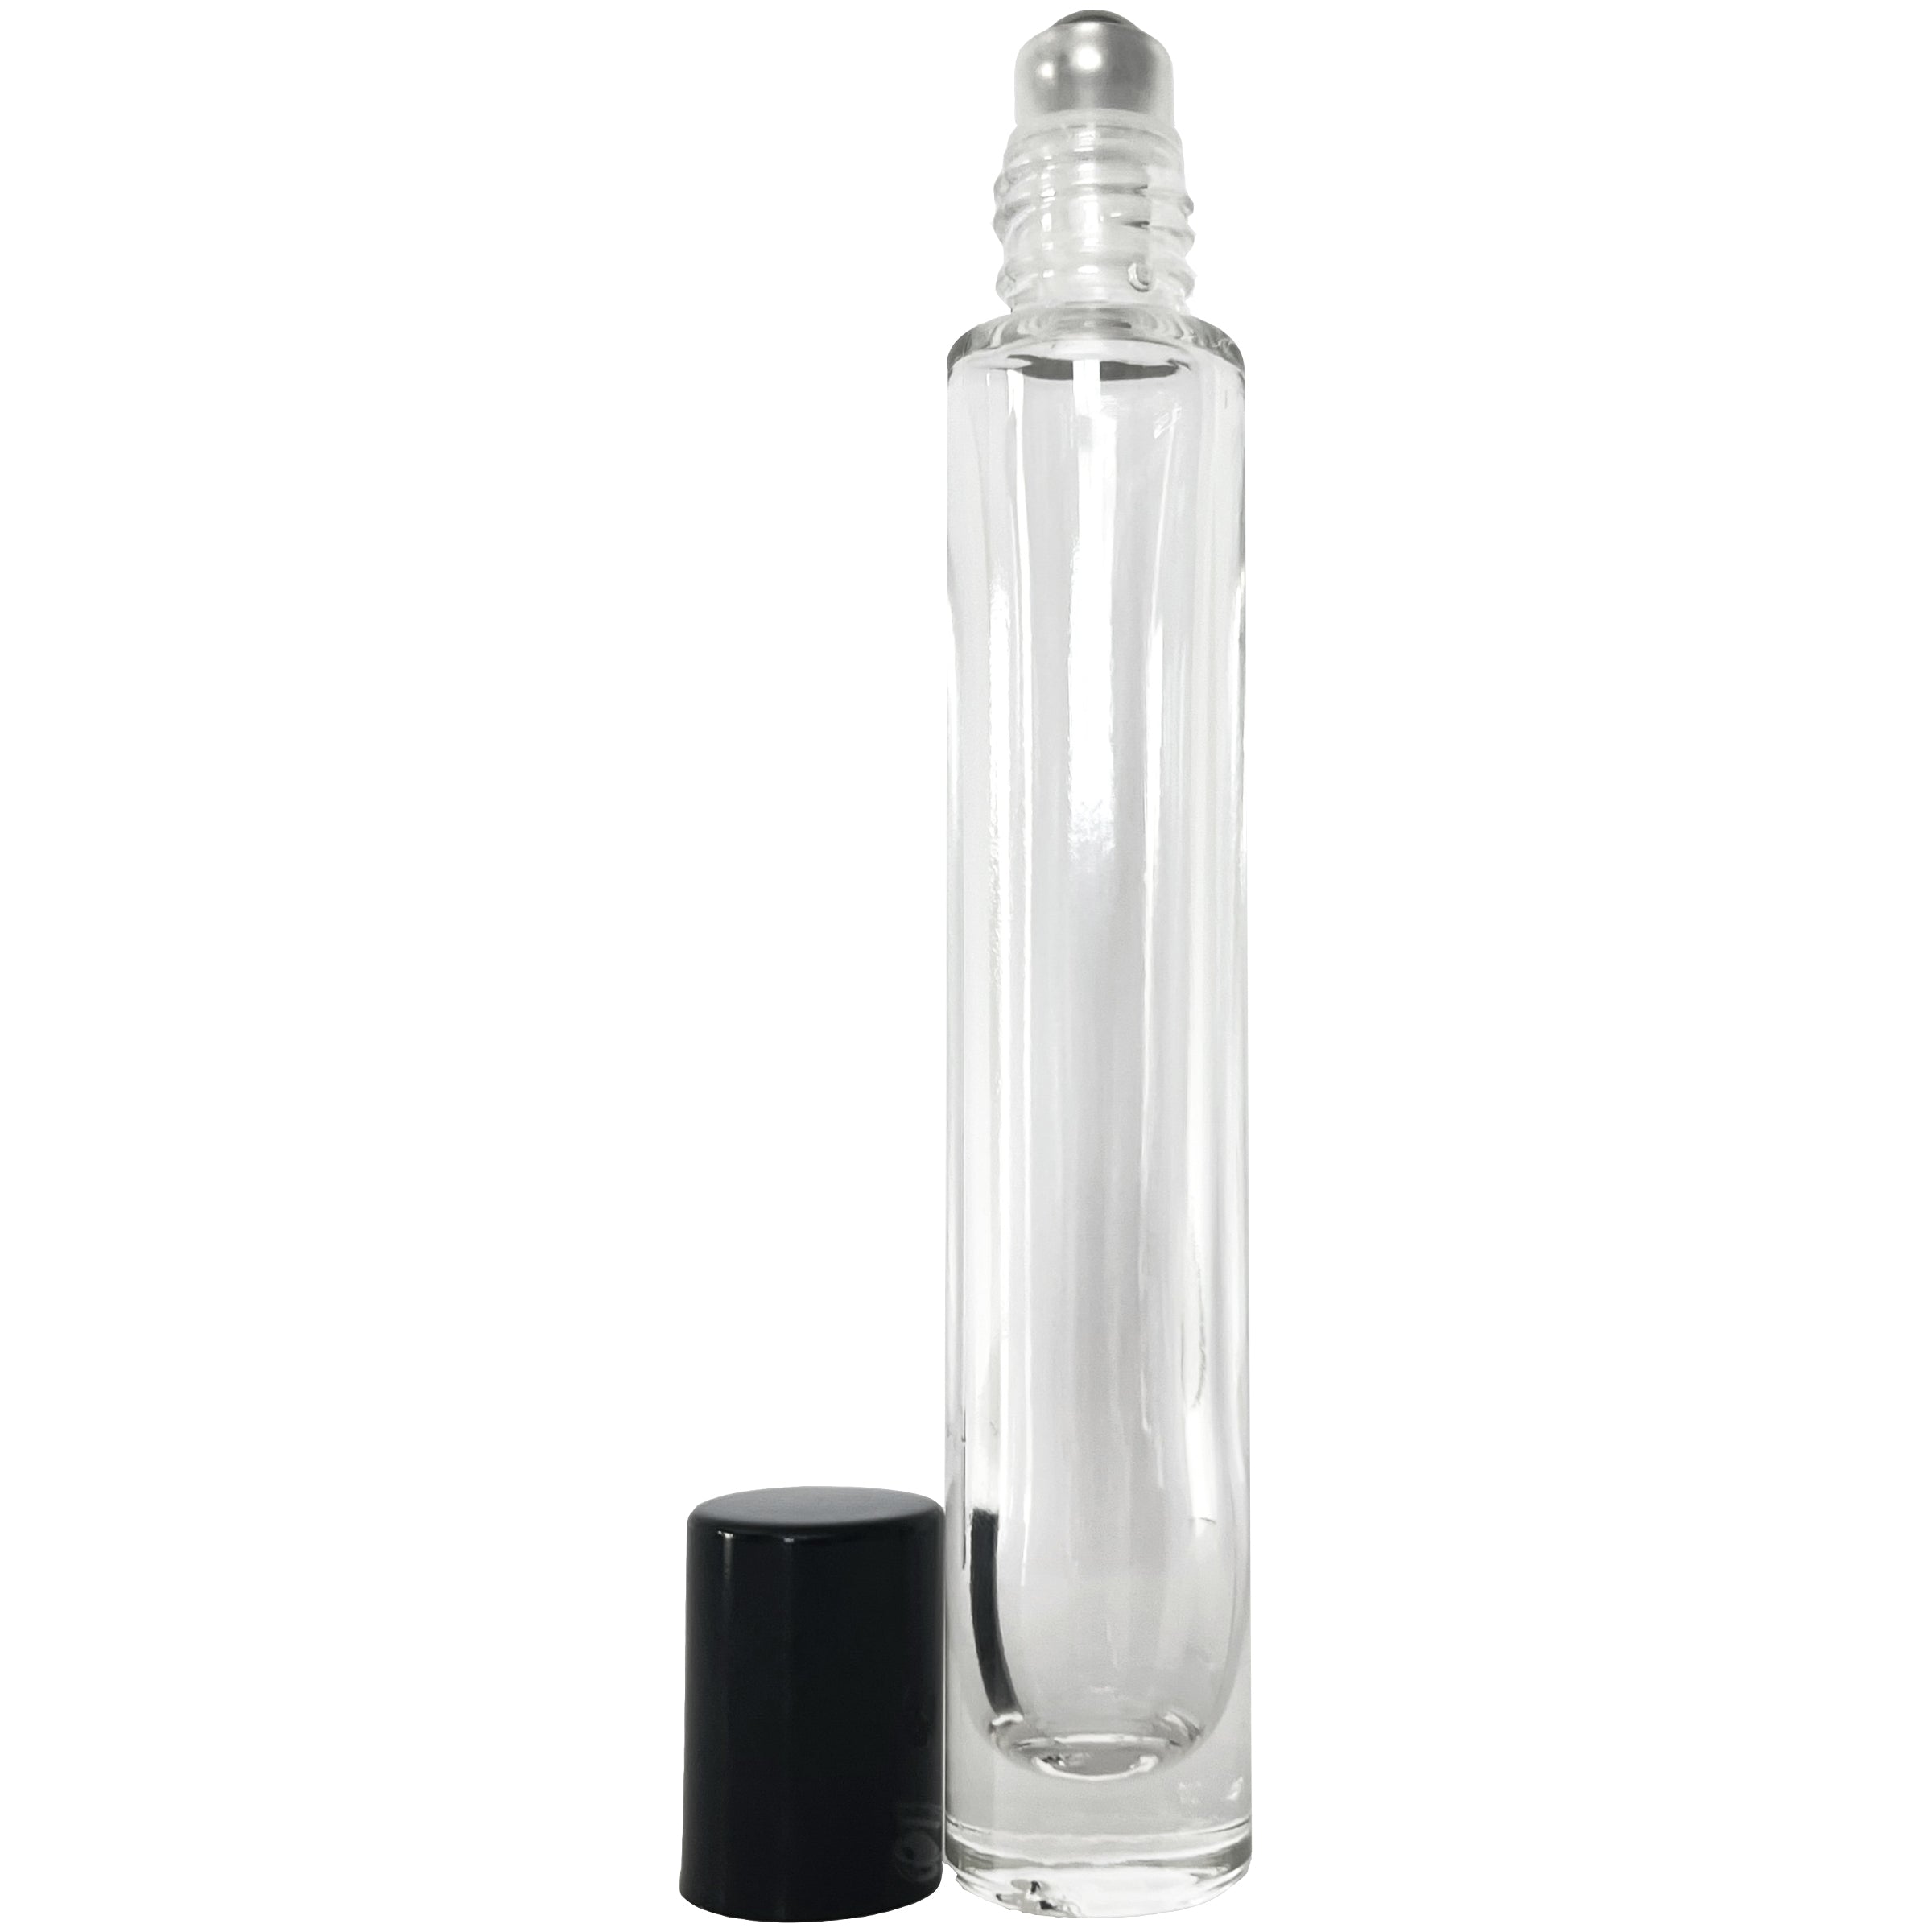 10ml 0.33oz Cylinder Thick Glass Roll On Roller Bottle Black Cap